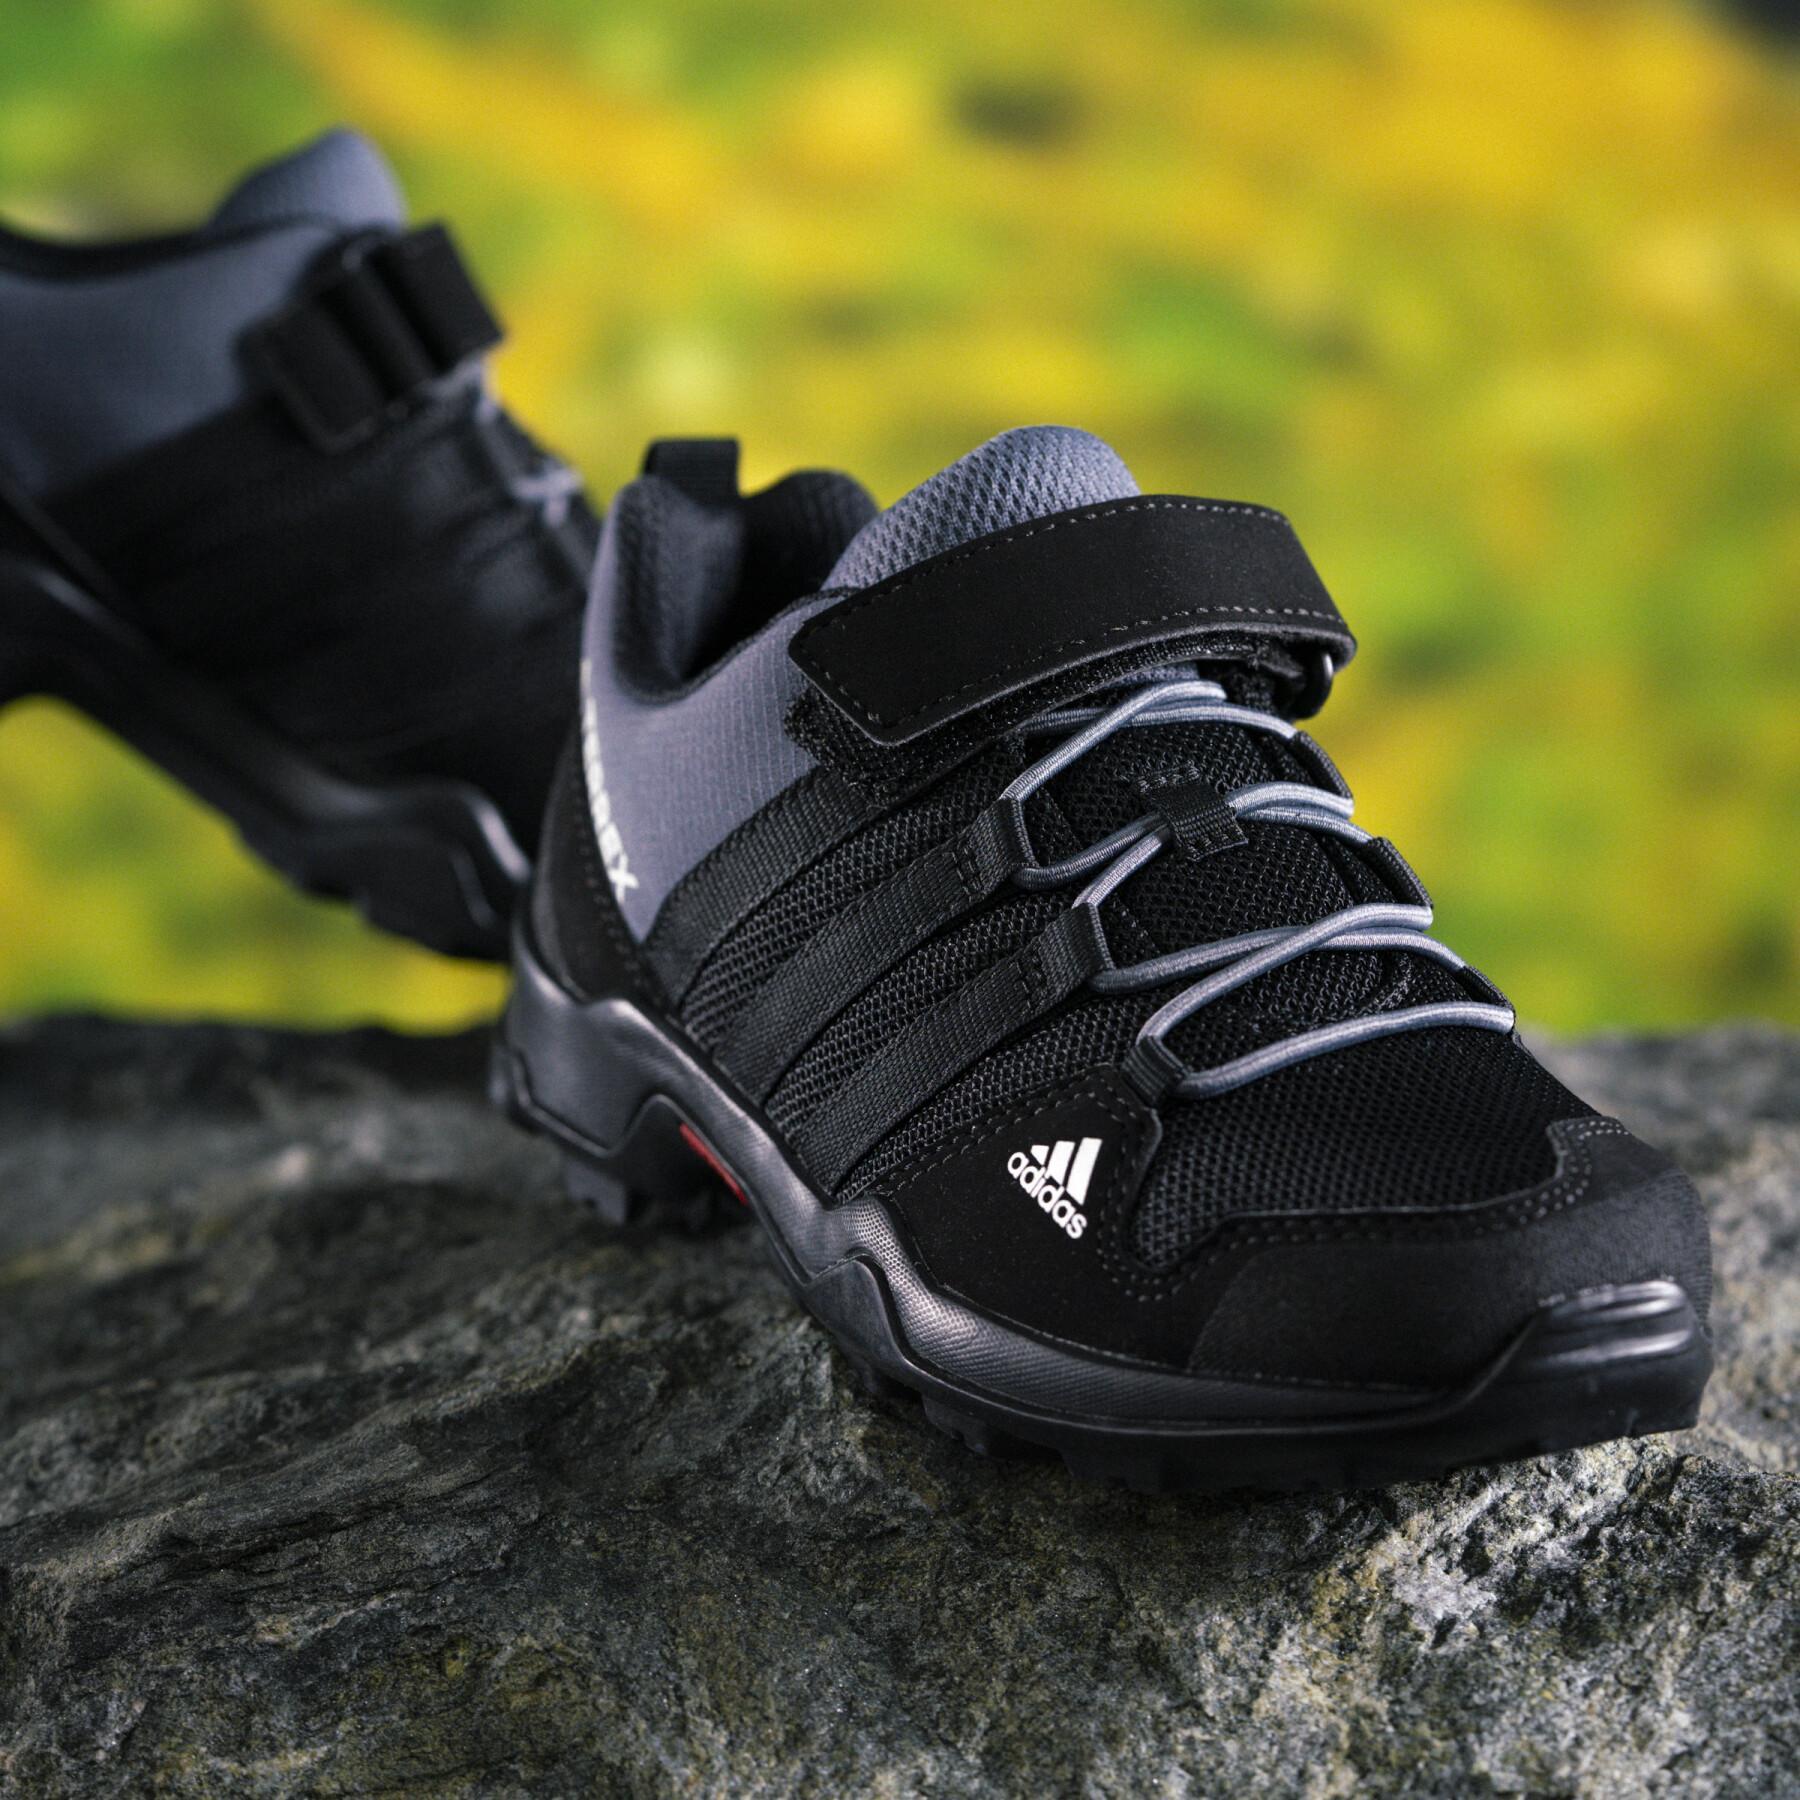 Chaussures de randonnée enfant adidas Terrex Ax2r Cf